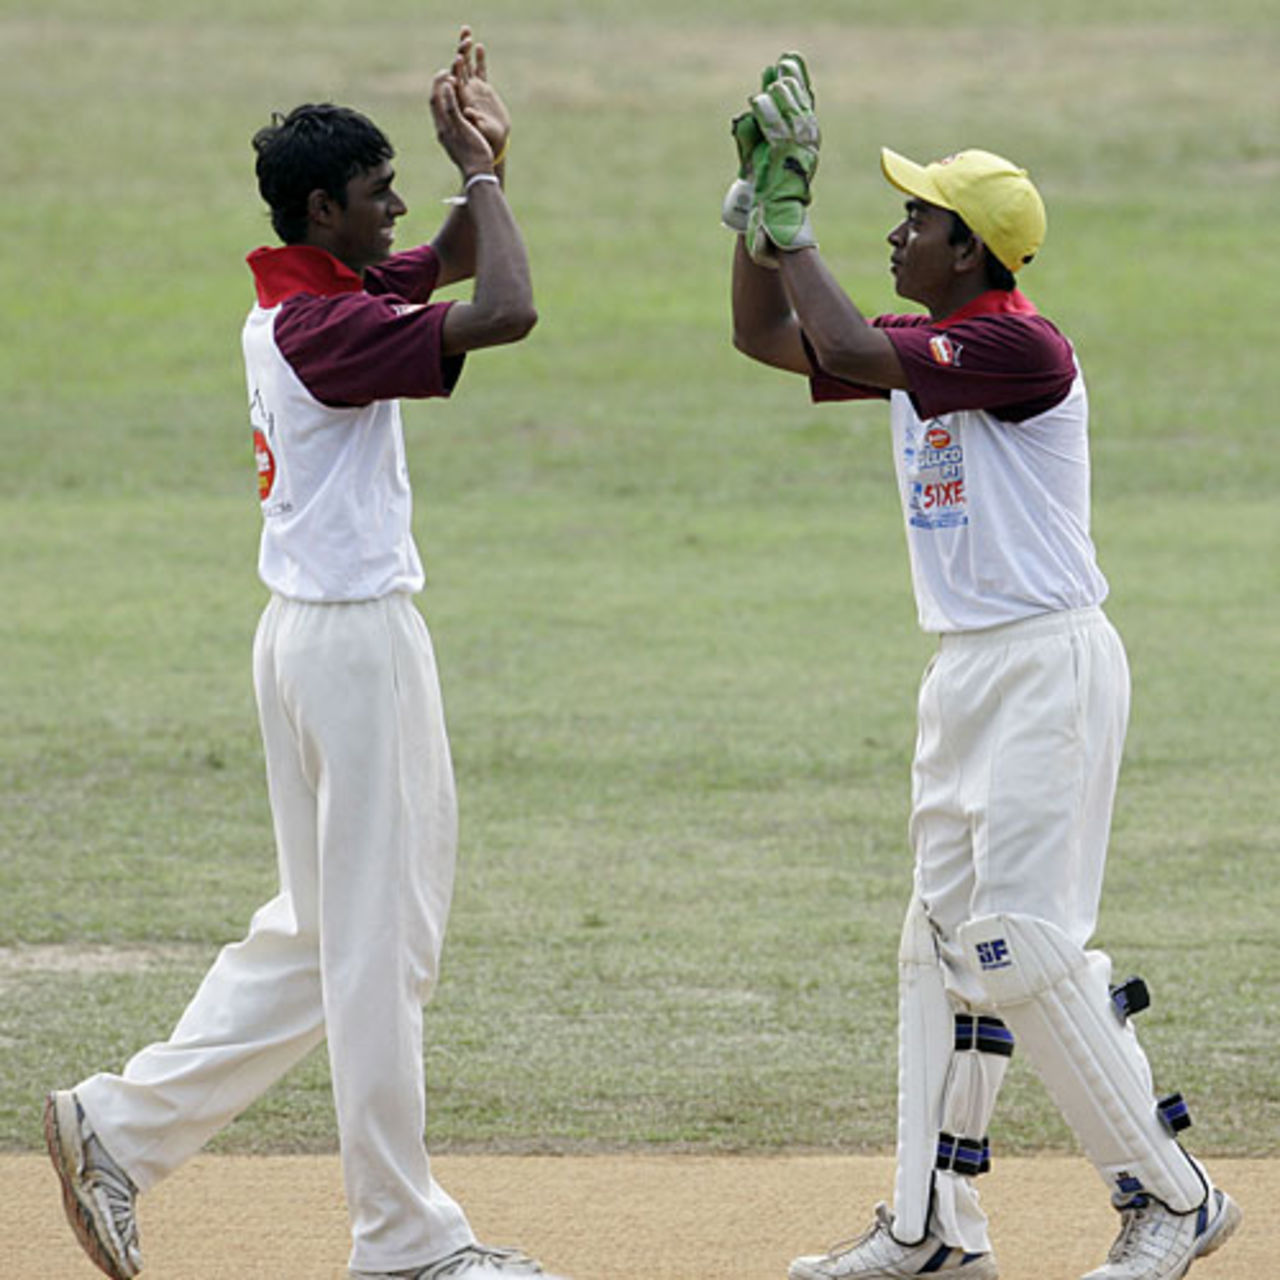 Nalanda College celebrate another wicket, Nalanda College v St Benedict's College, Glucofit Cricket Sixes, Colombo, October 18, 2009